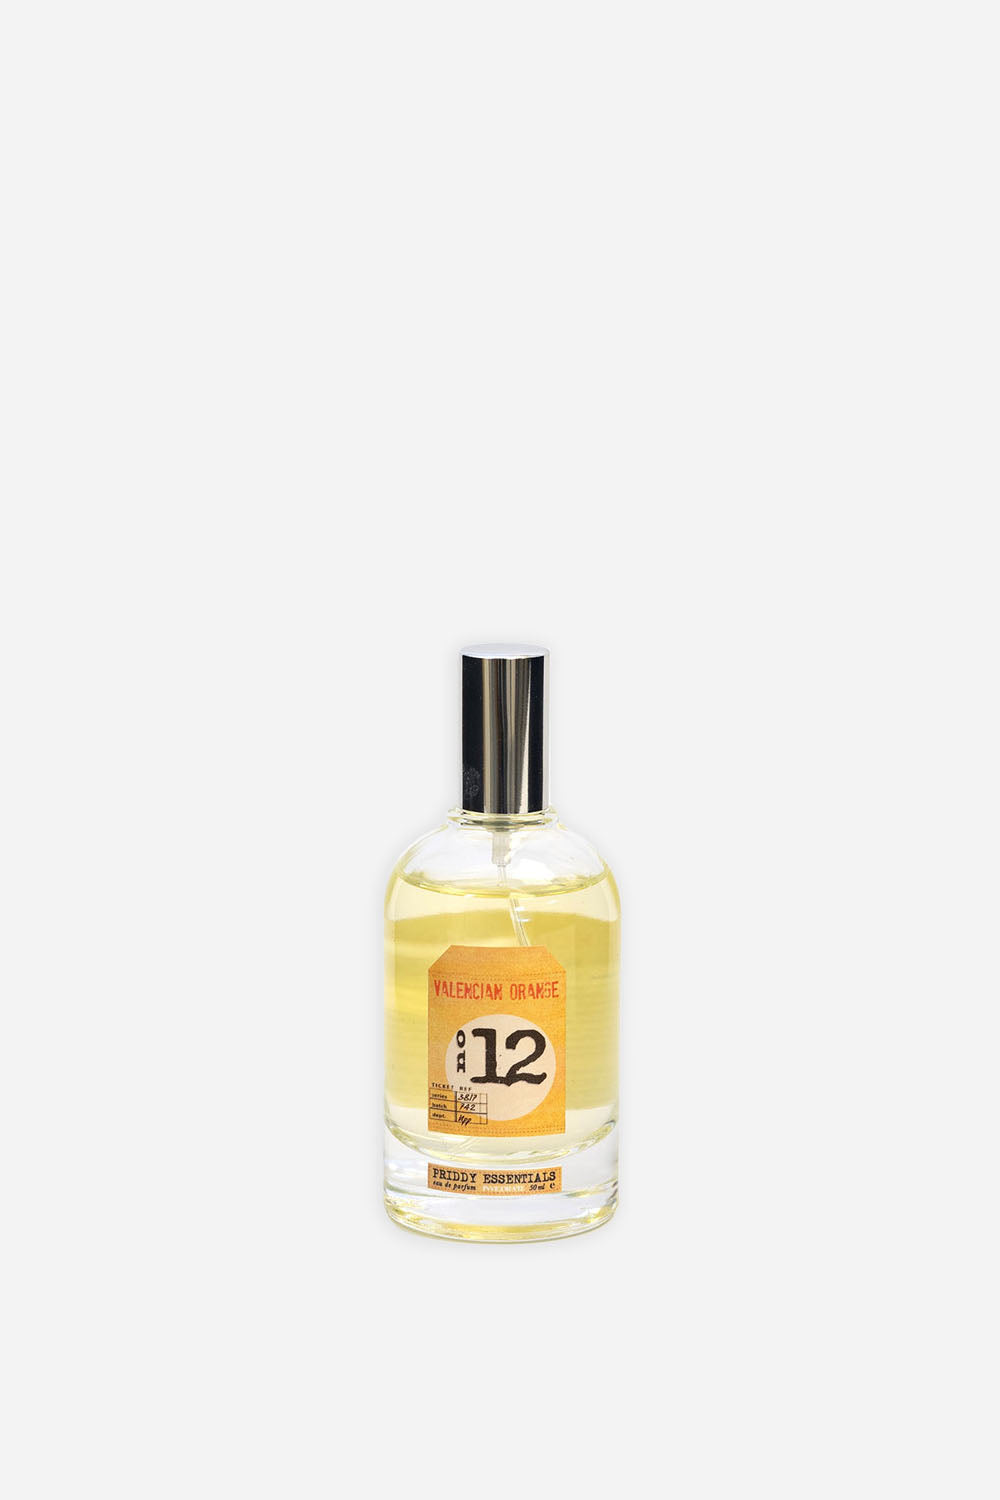 Priddy Fragrance No.12 Valencian Orange